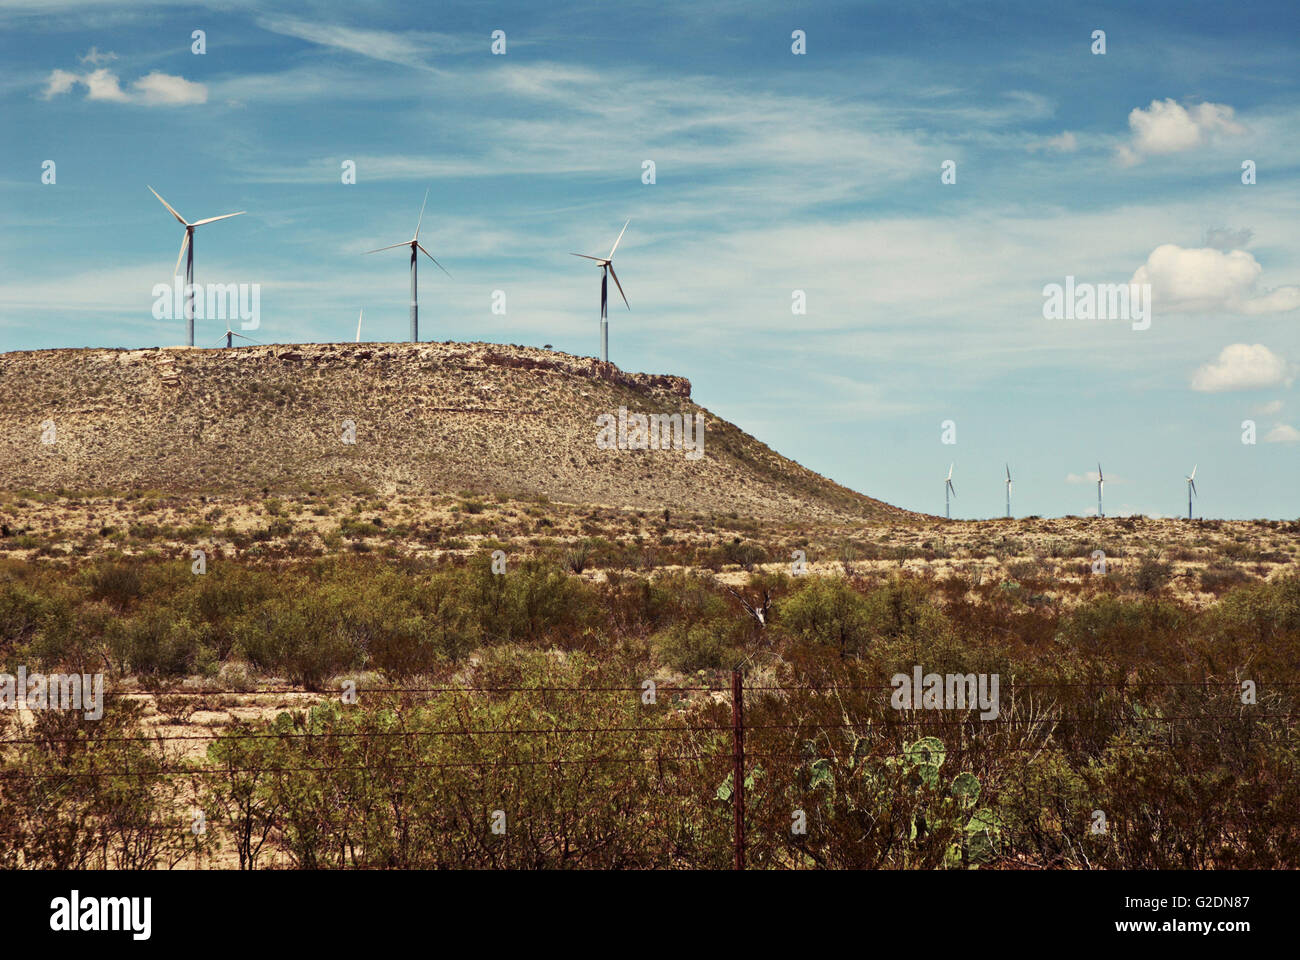 Wind Turbines in Arid Landscape Stock Photo